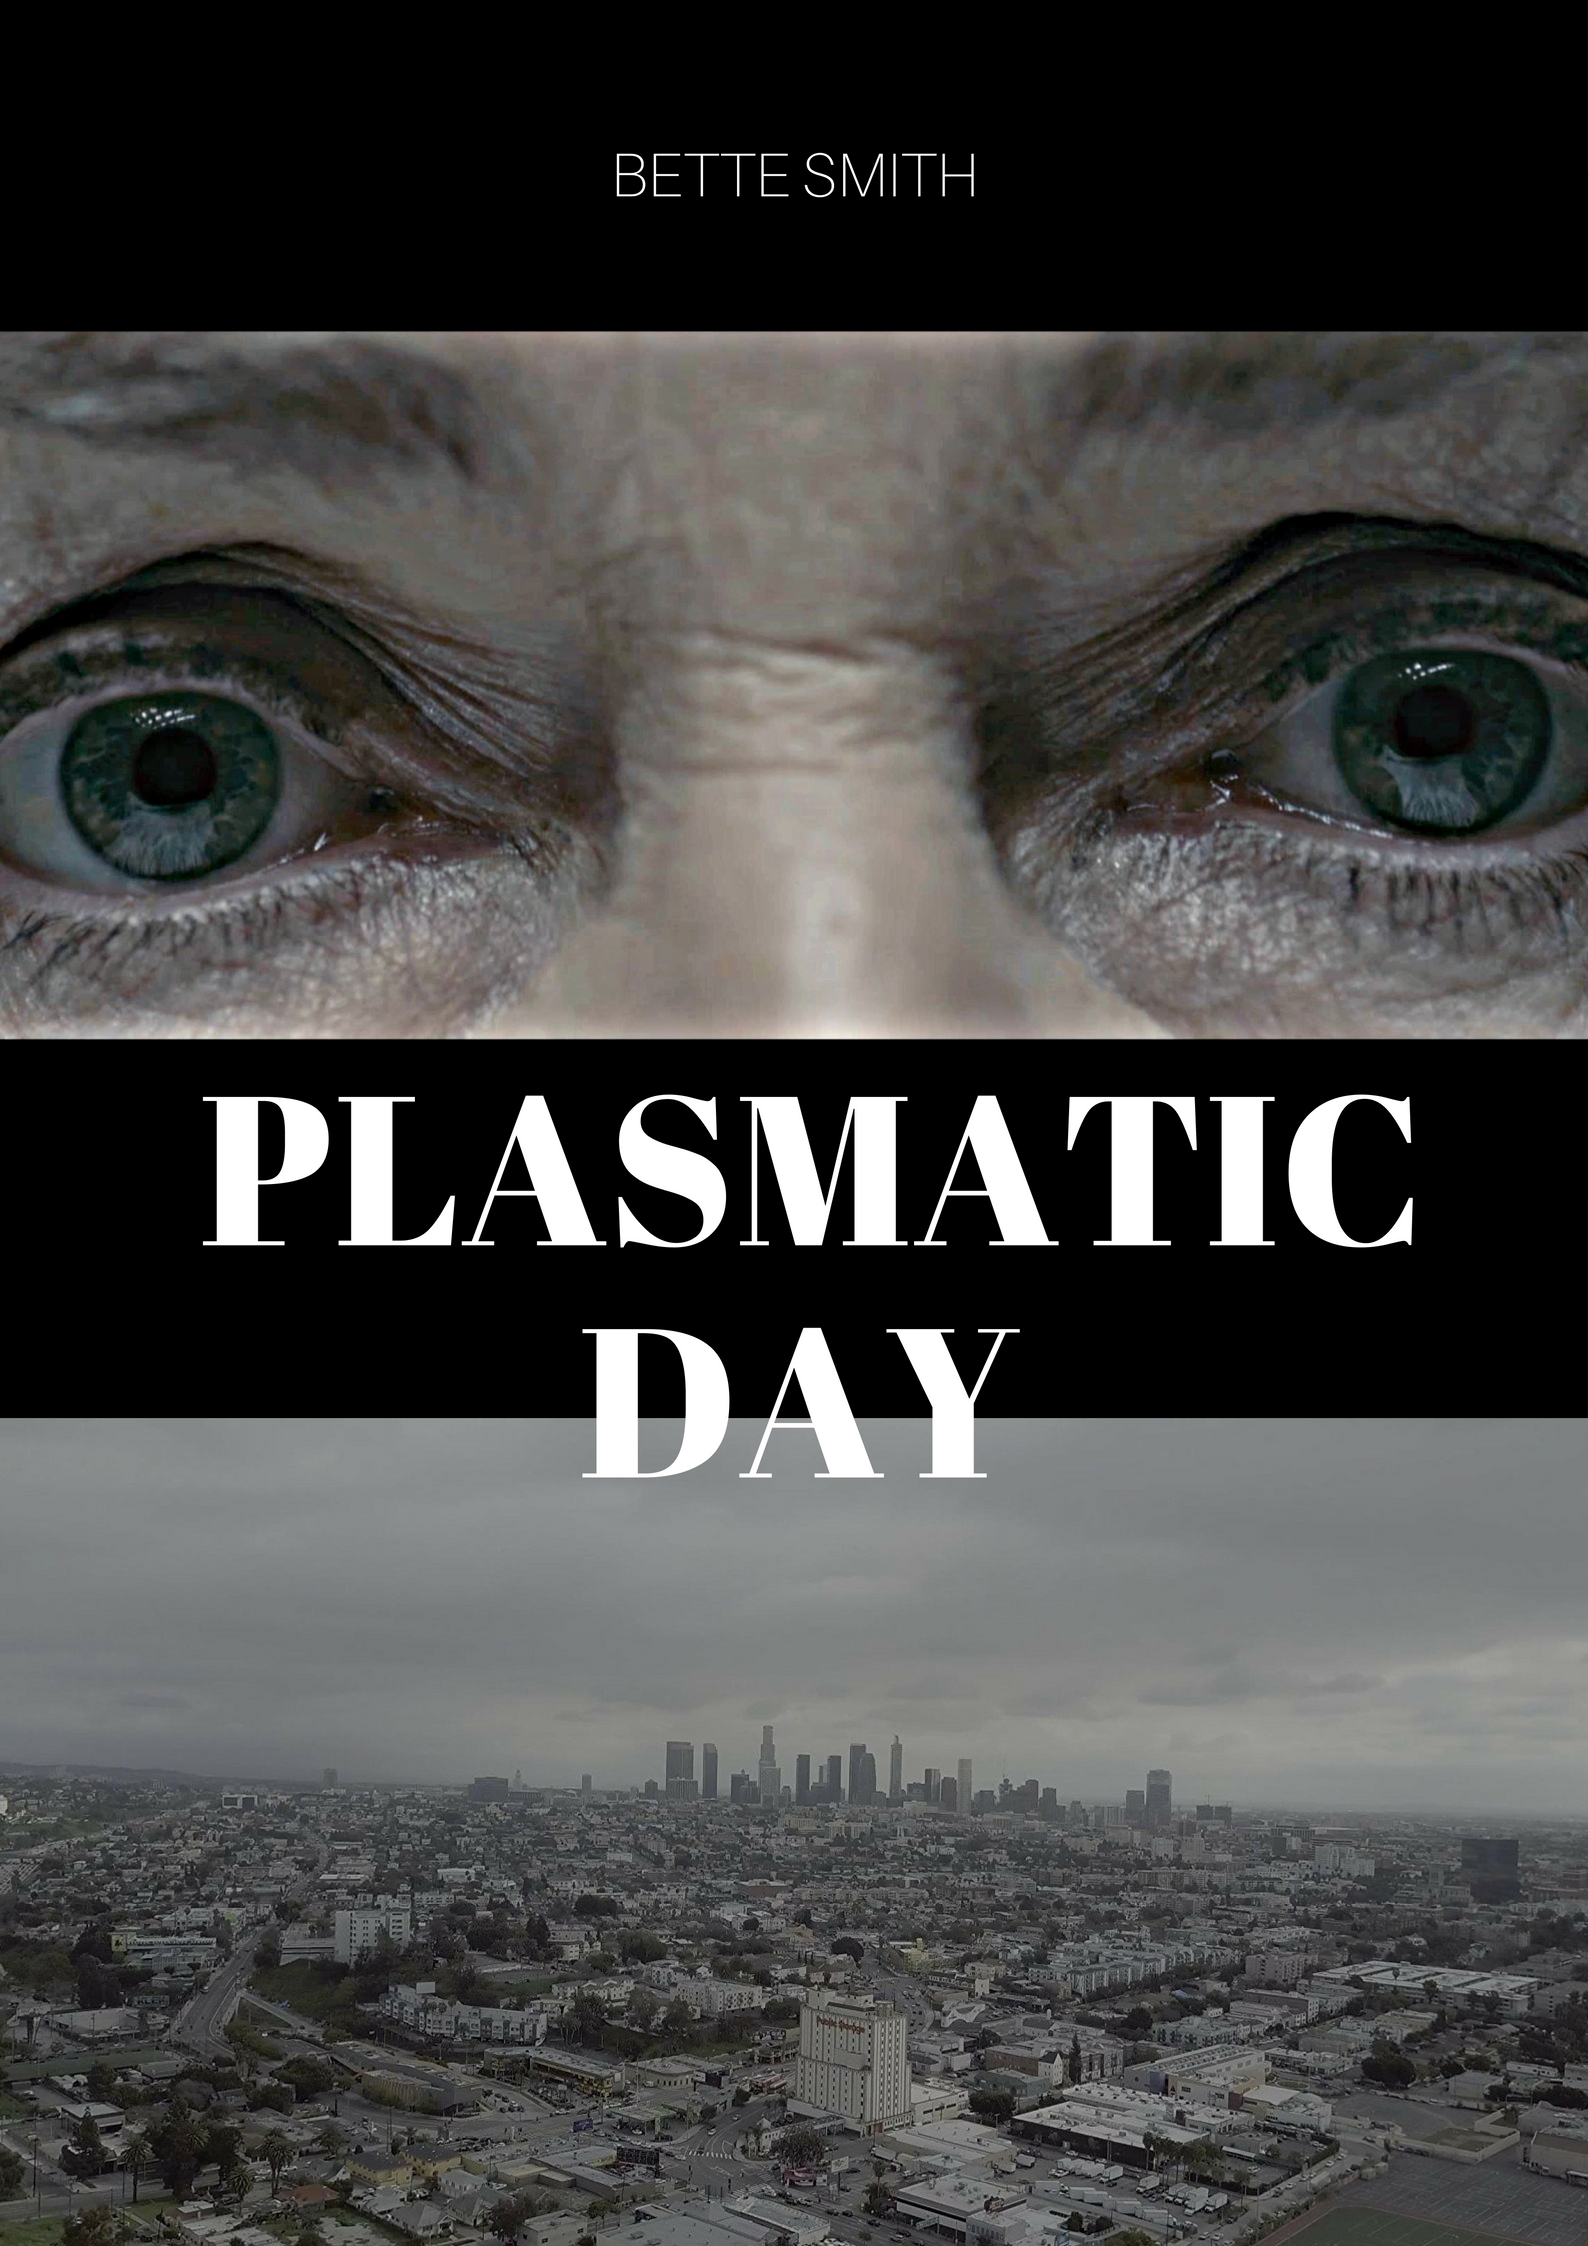 Plasmatic Day